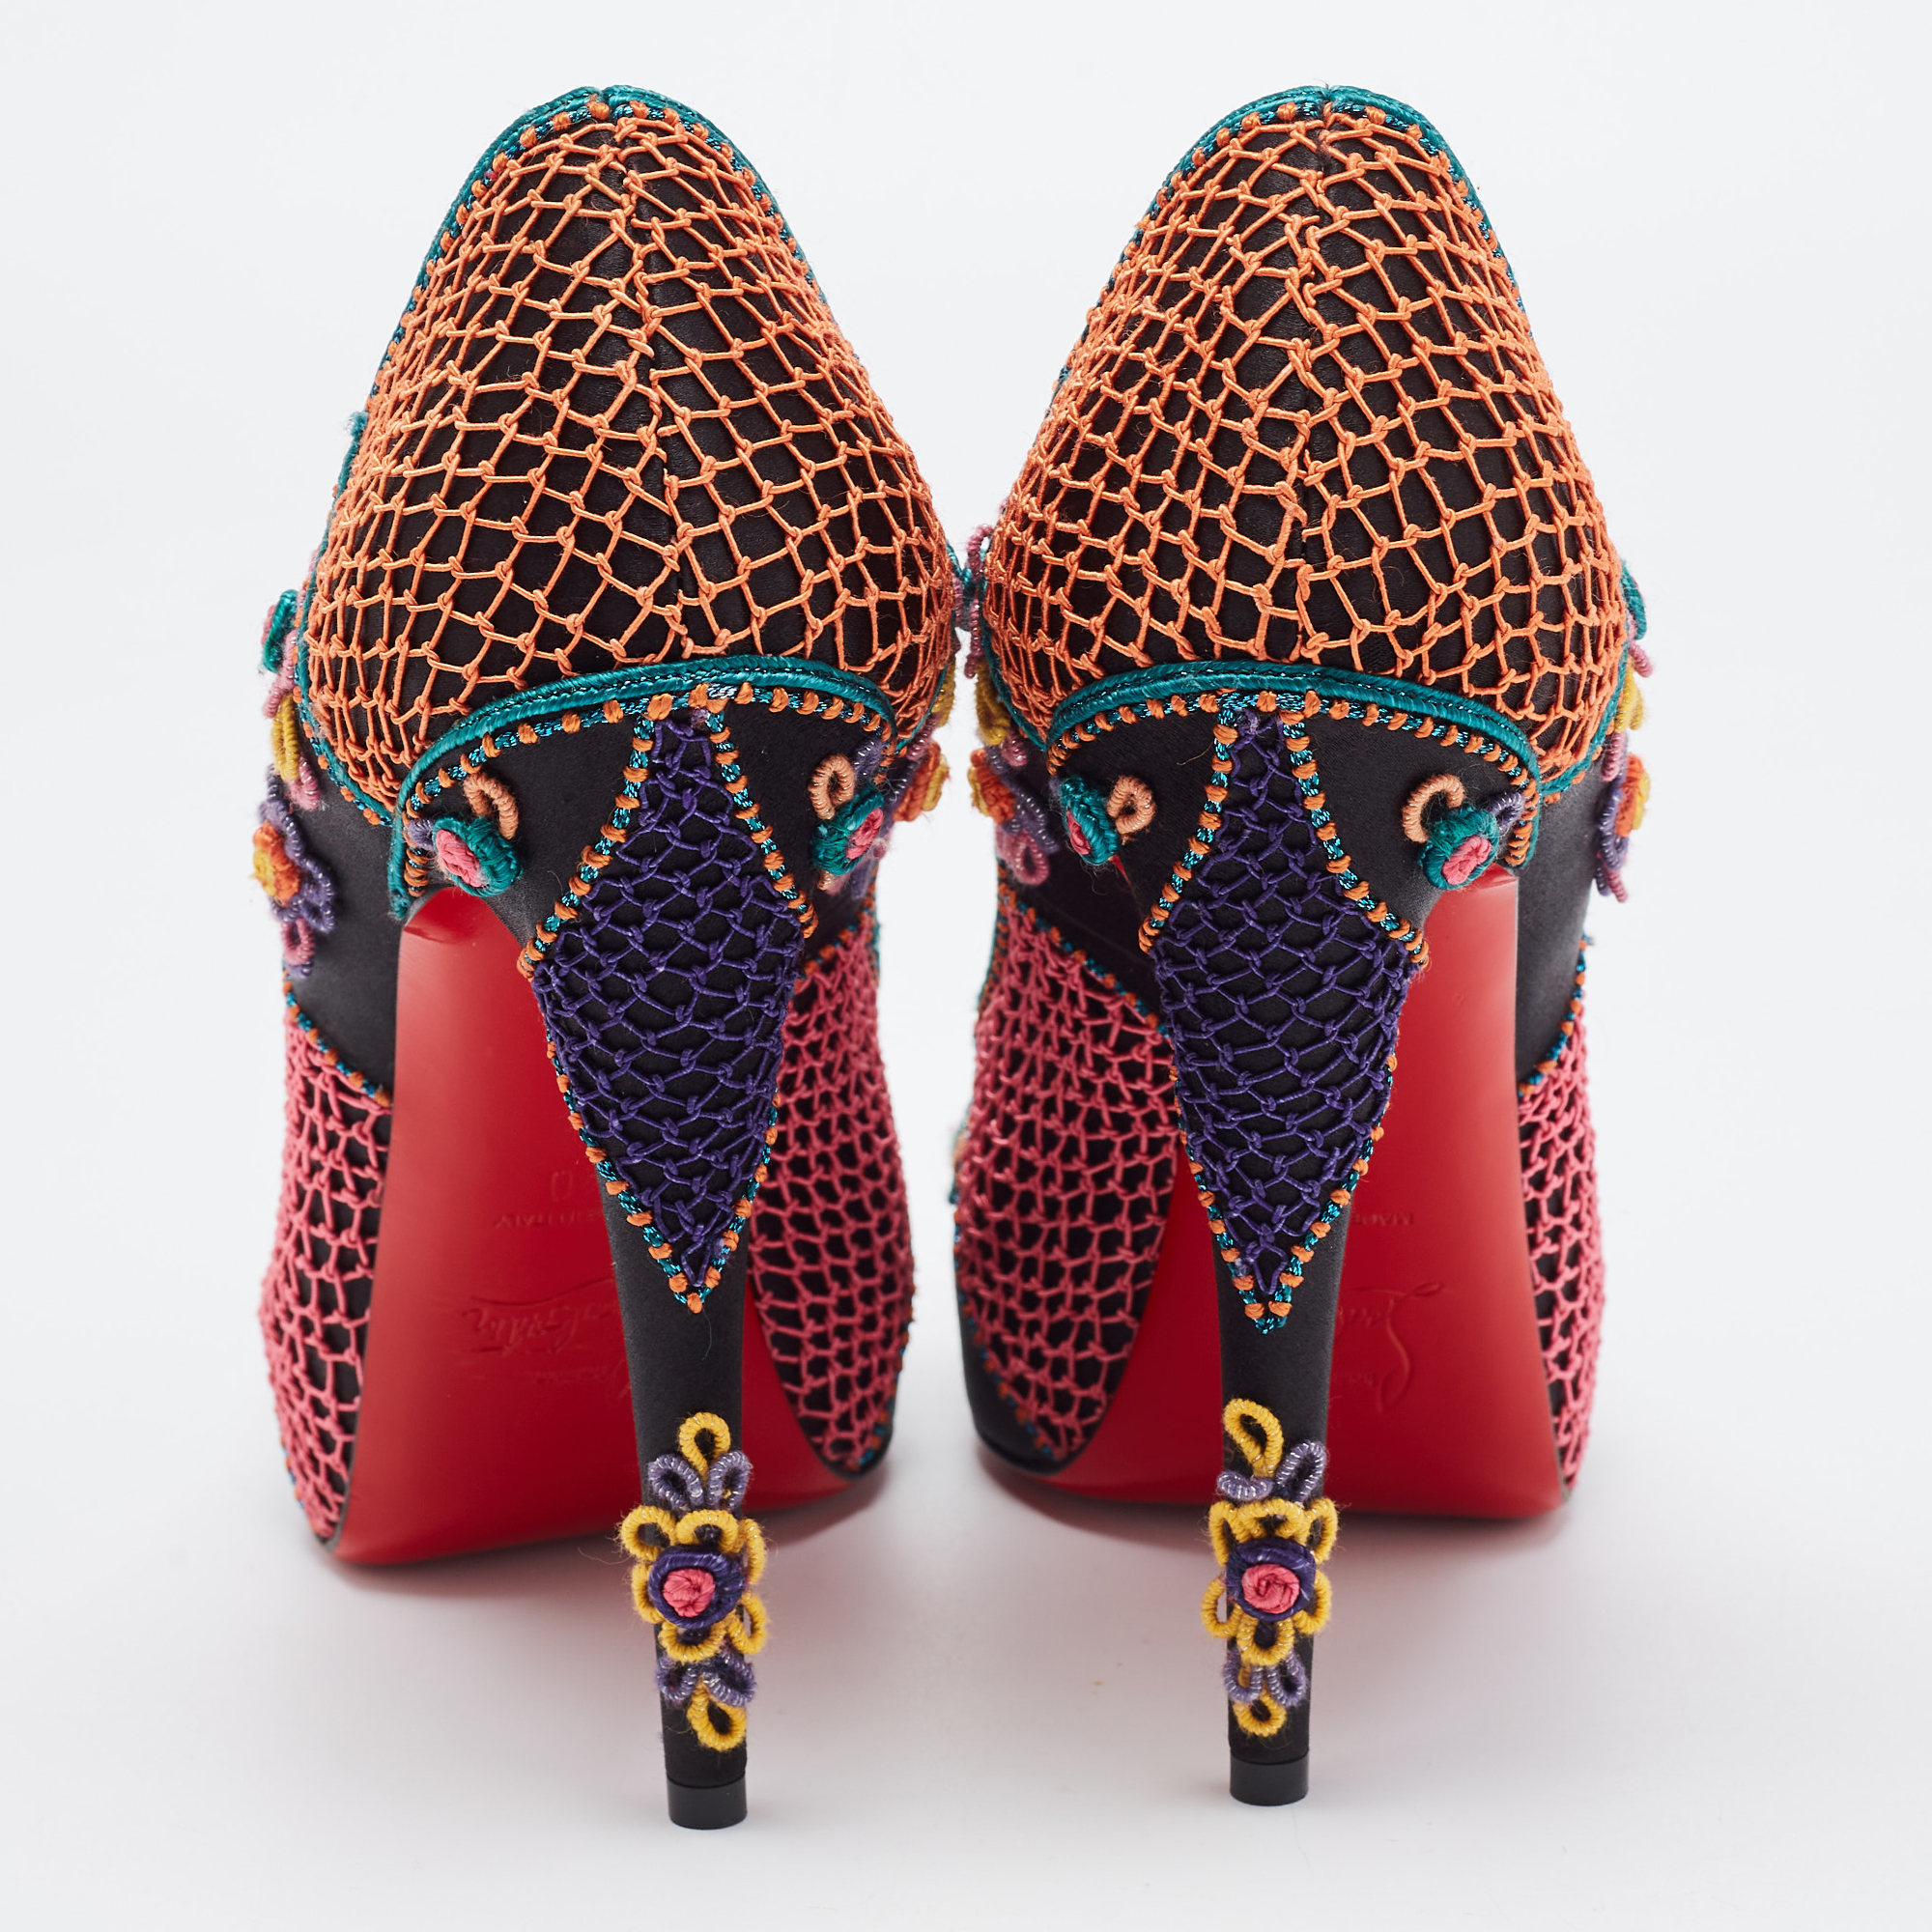 Christian Louboutin Multicolor Embellished Satin Bow Peep Toe Platform Pumps Size 40